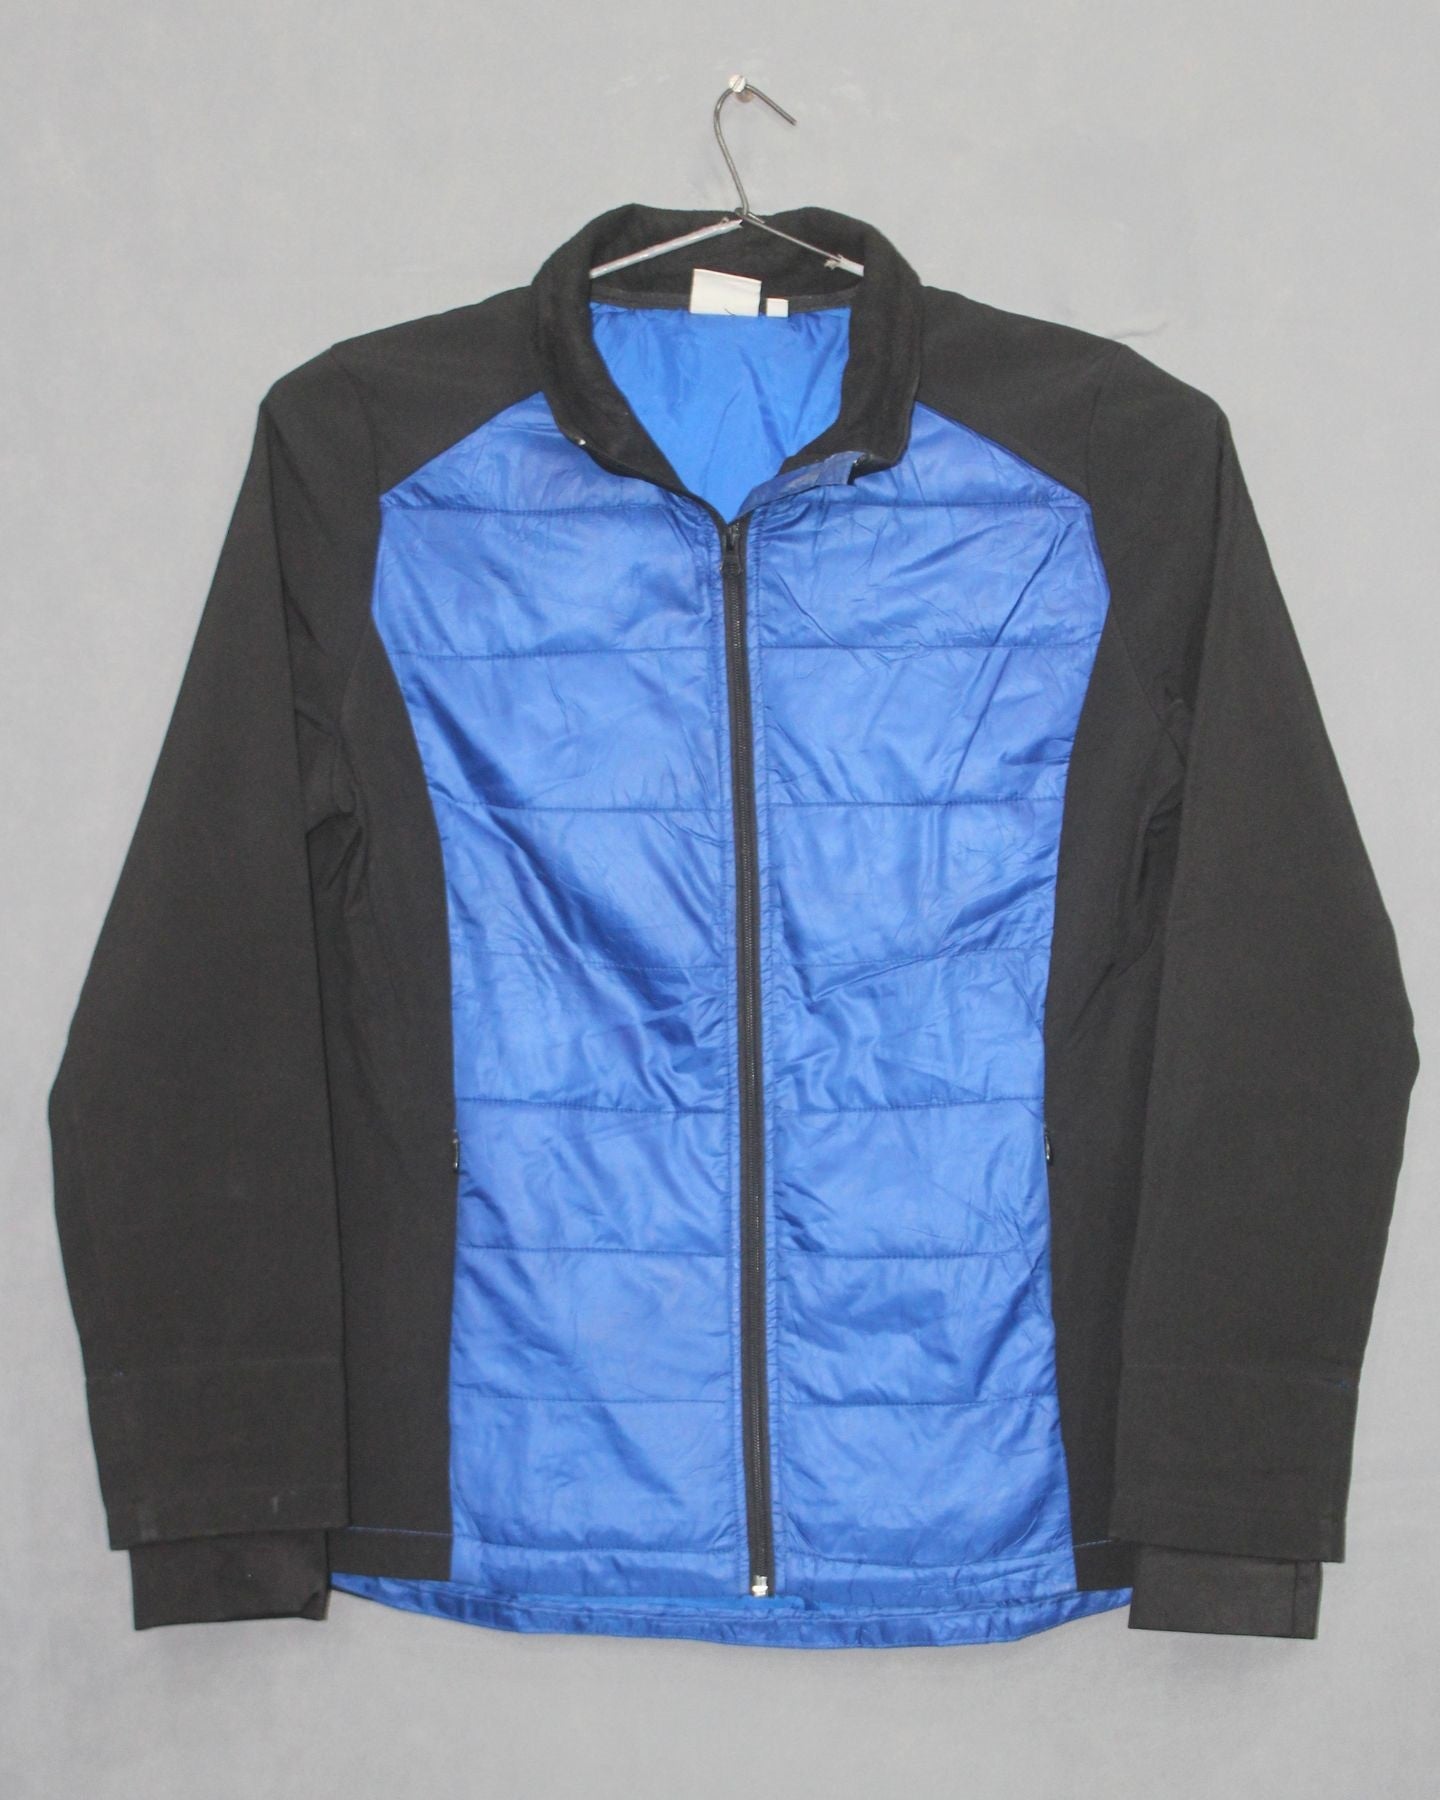 Athletic Branded Original Parachute Collar For Men Jacket